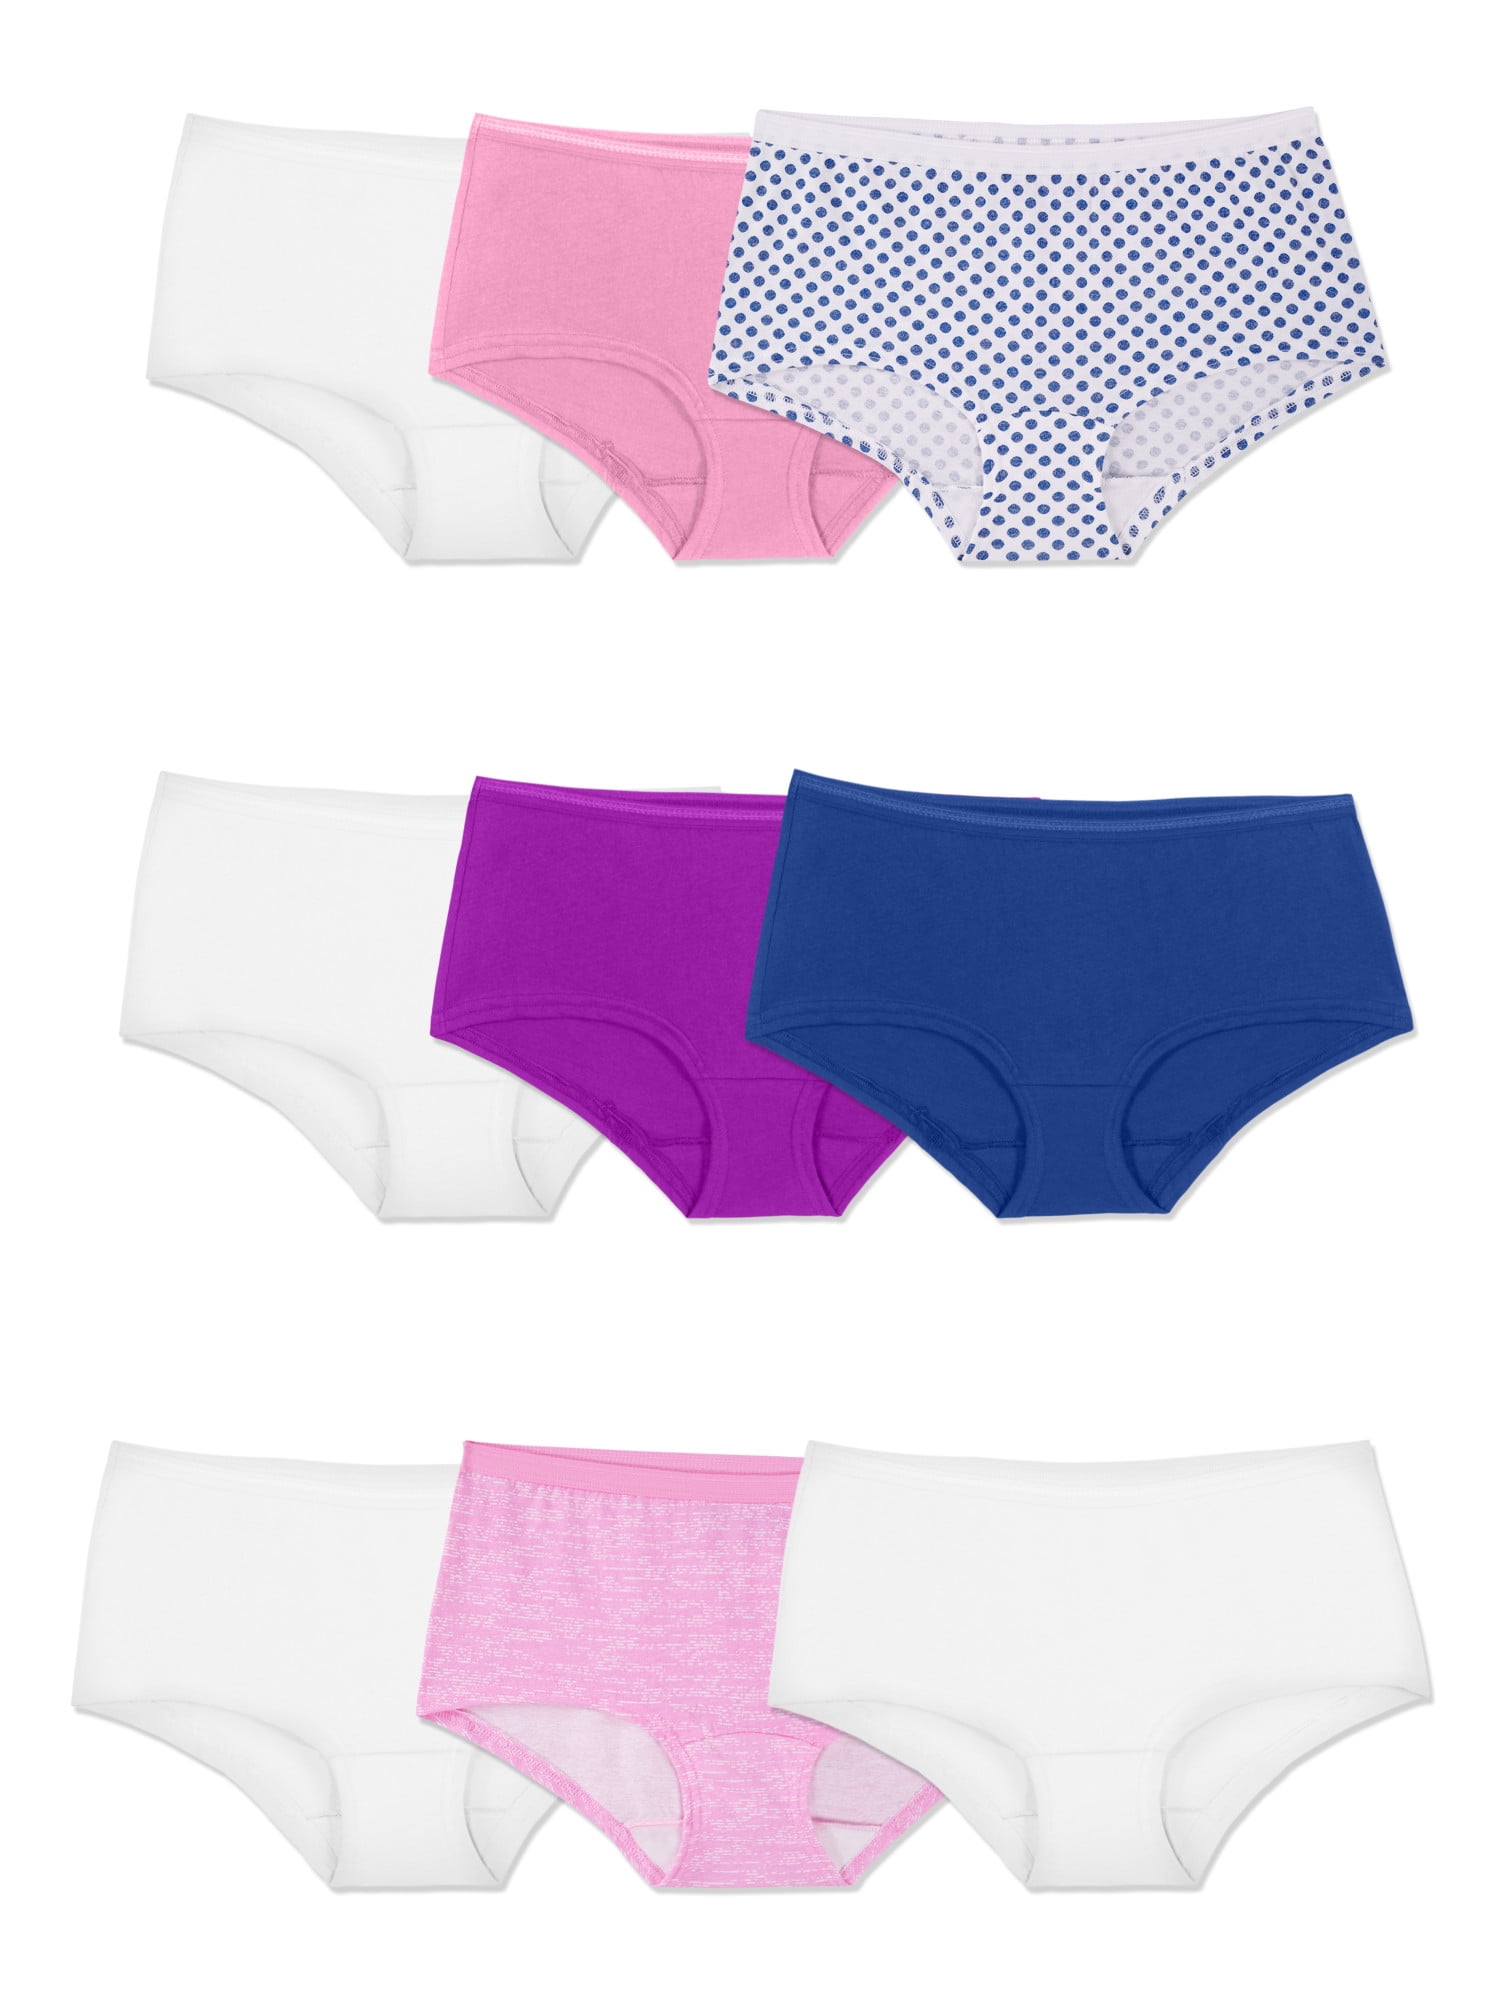 Women's Assorted Cotton Boyshort Panties, 6 Pack 